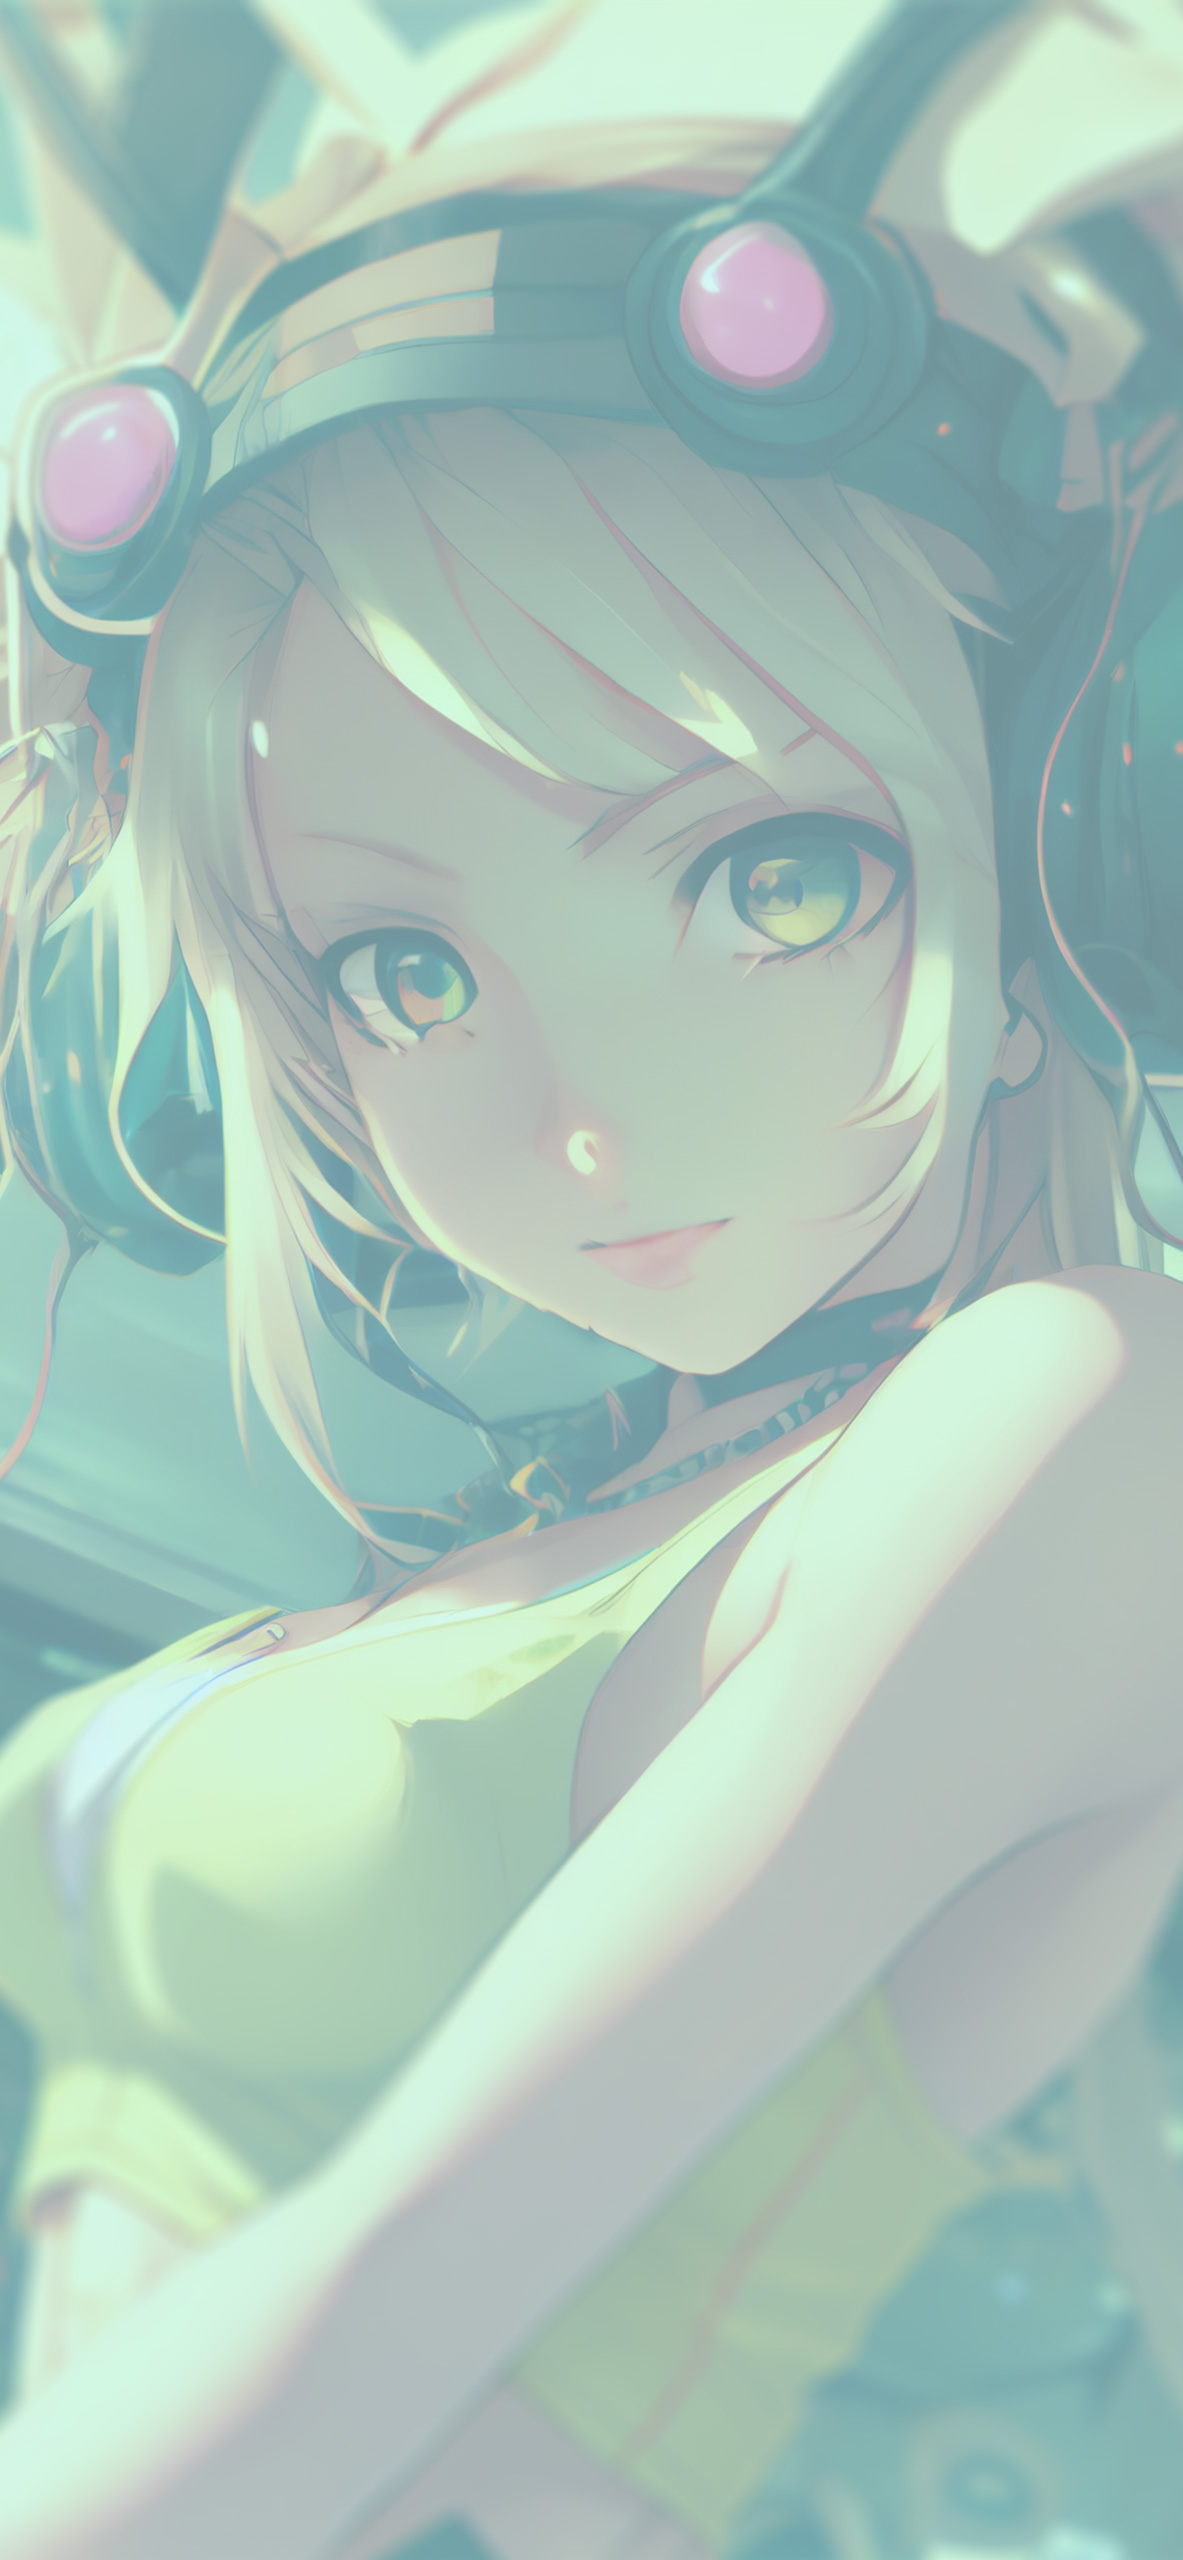 girl with headphones animecore background